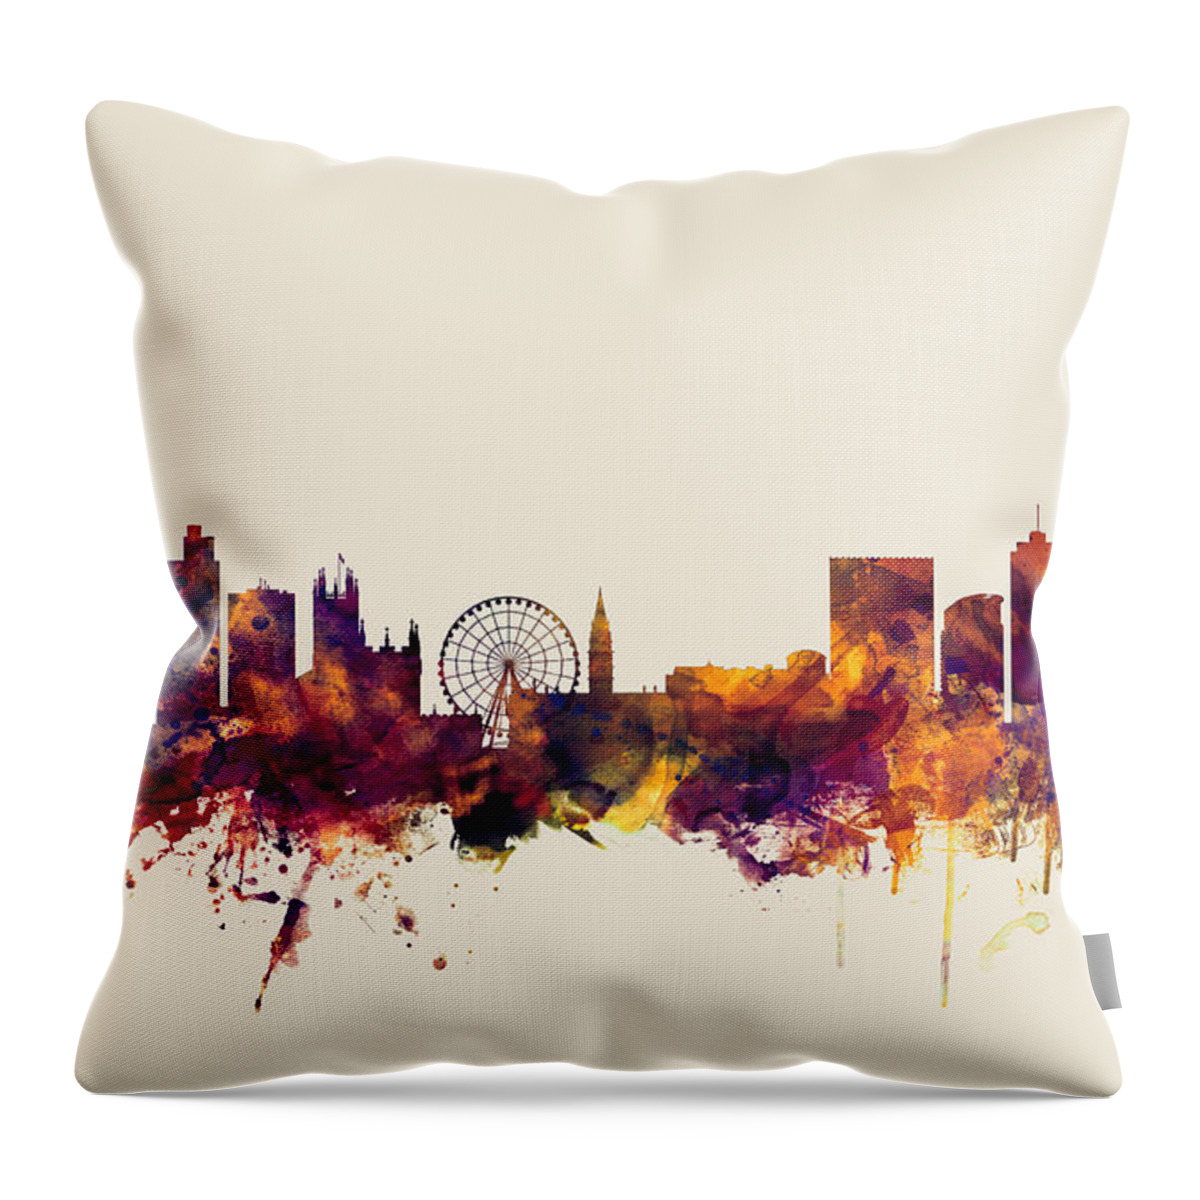 City Throw Pillow featuring the digital art Manchester England Skyline by Michael Tompsett